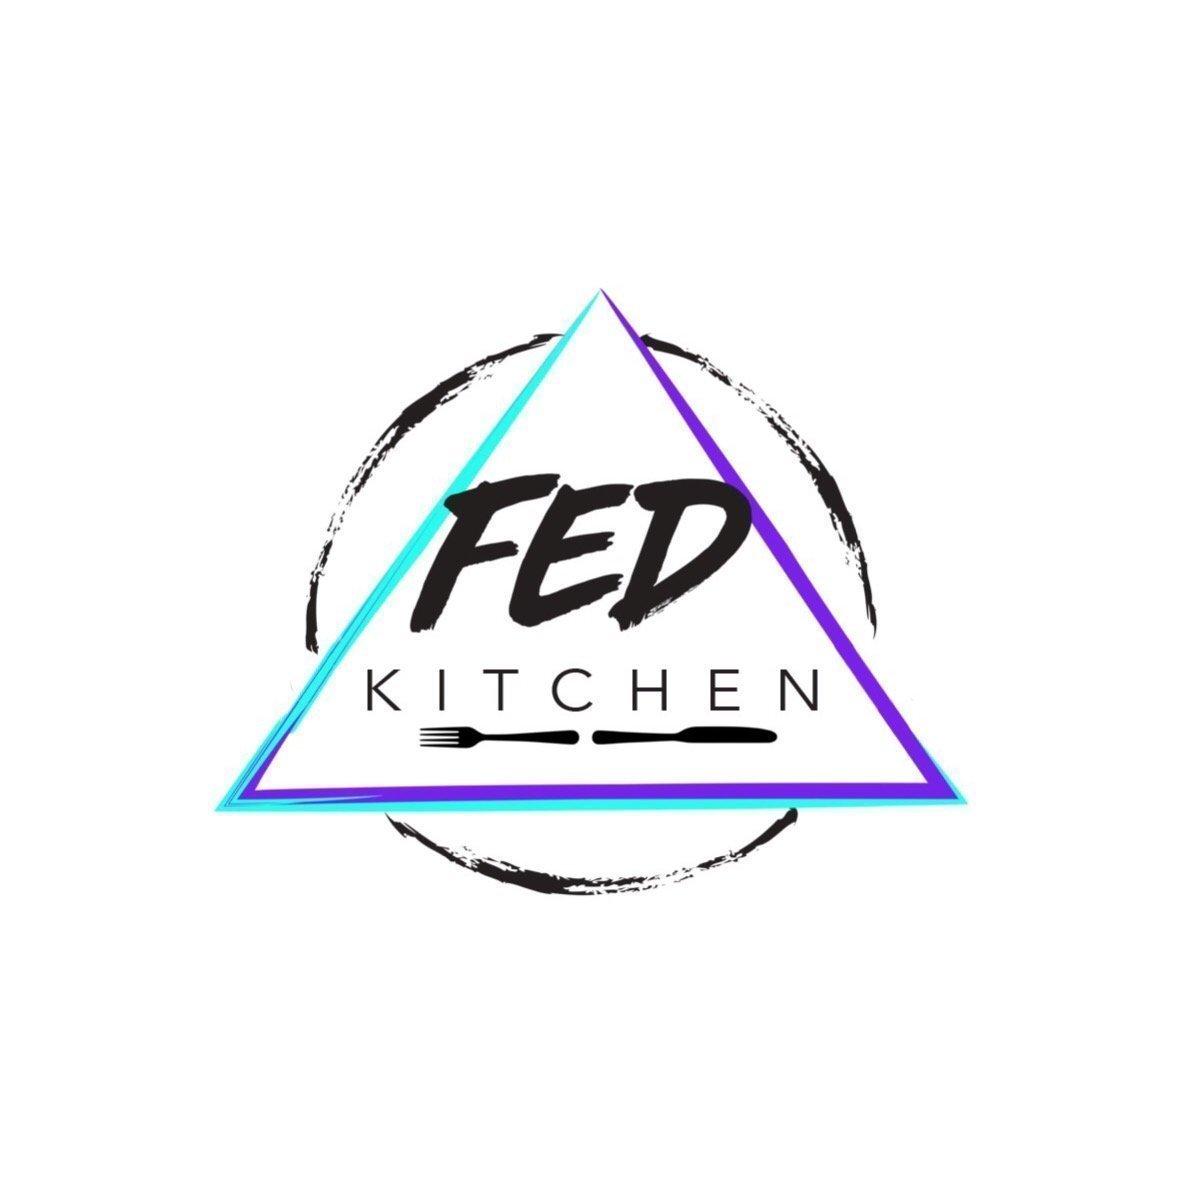 Fed Kitchen Springfield